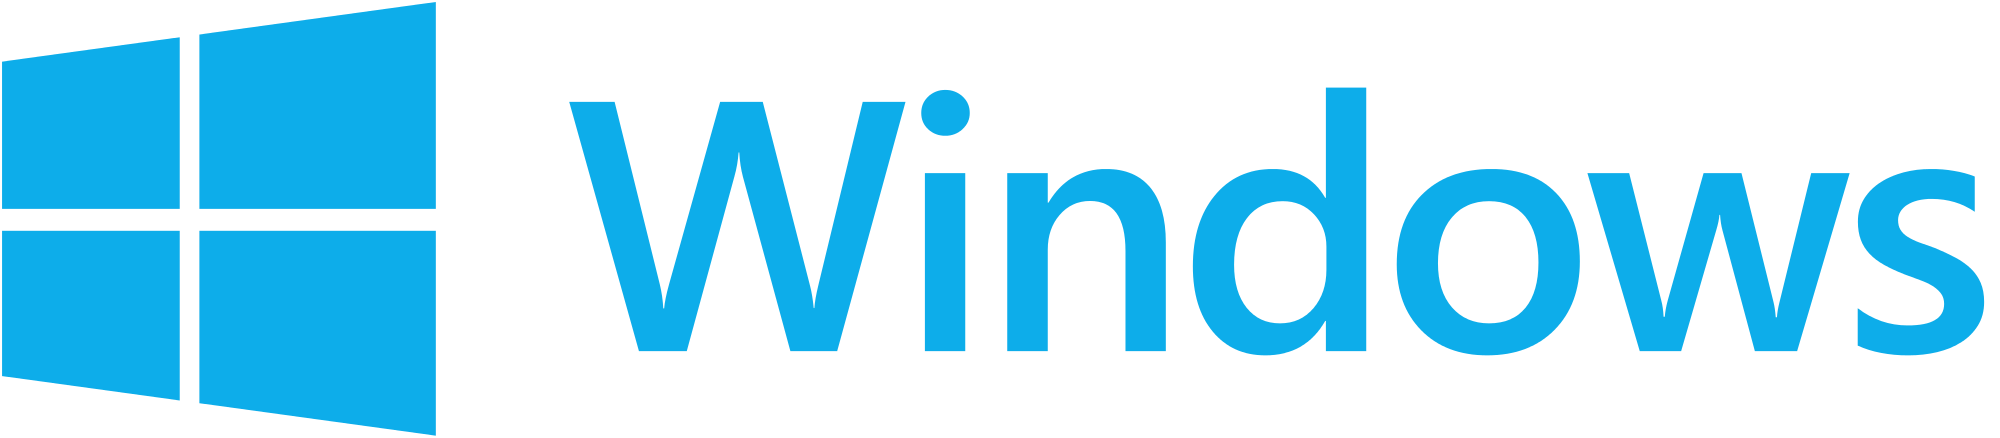 Windows Logo PNG Best Image pngteam.com